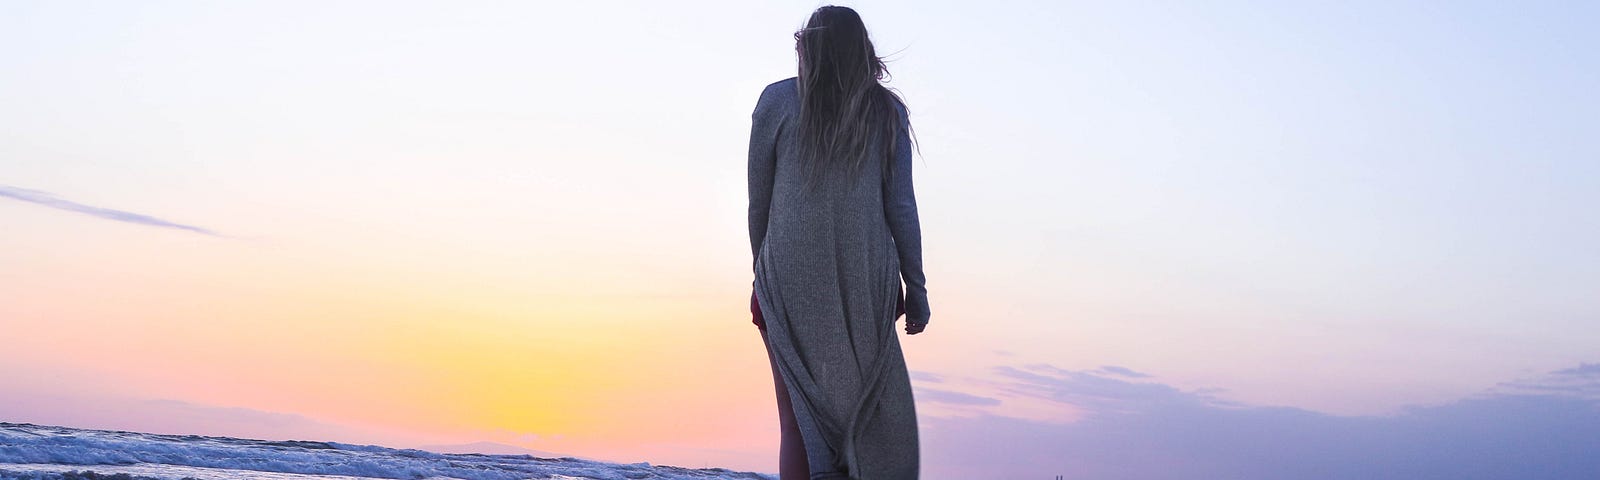 woman back toward us wearing long coat walking along beach sunrise